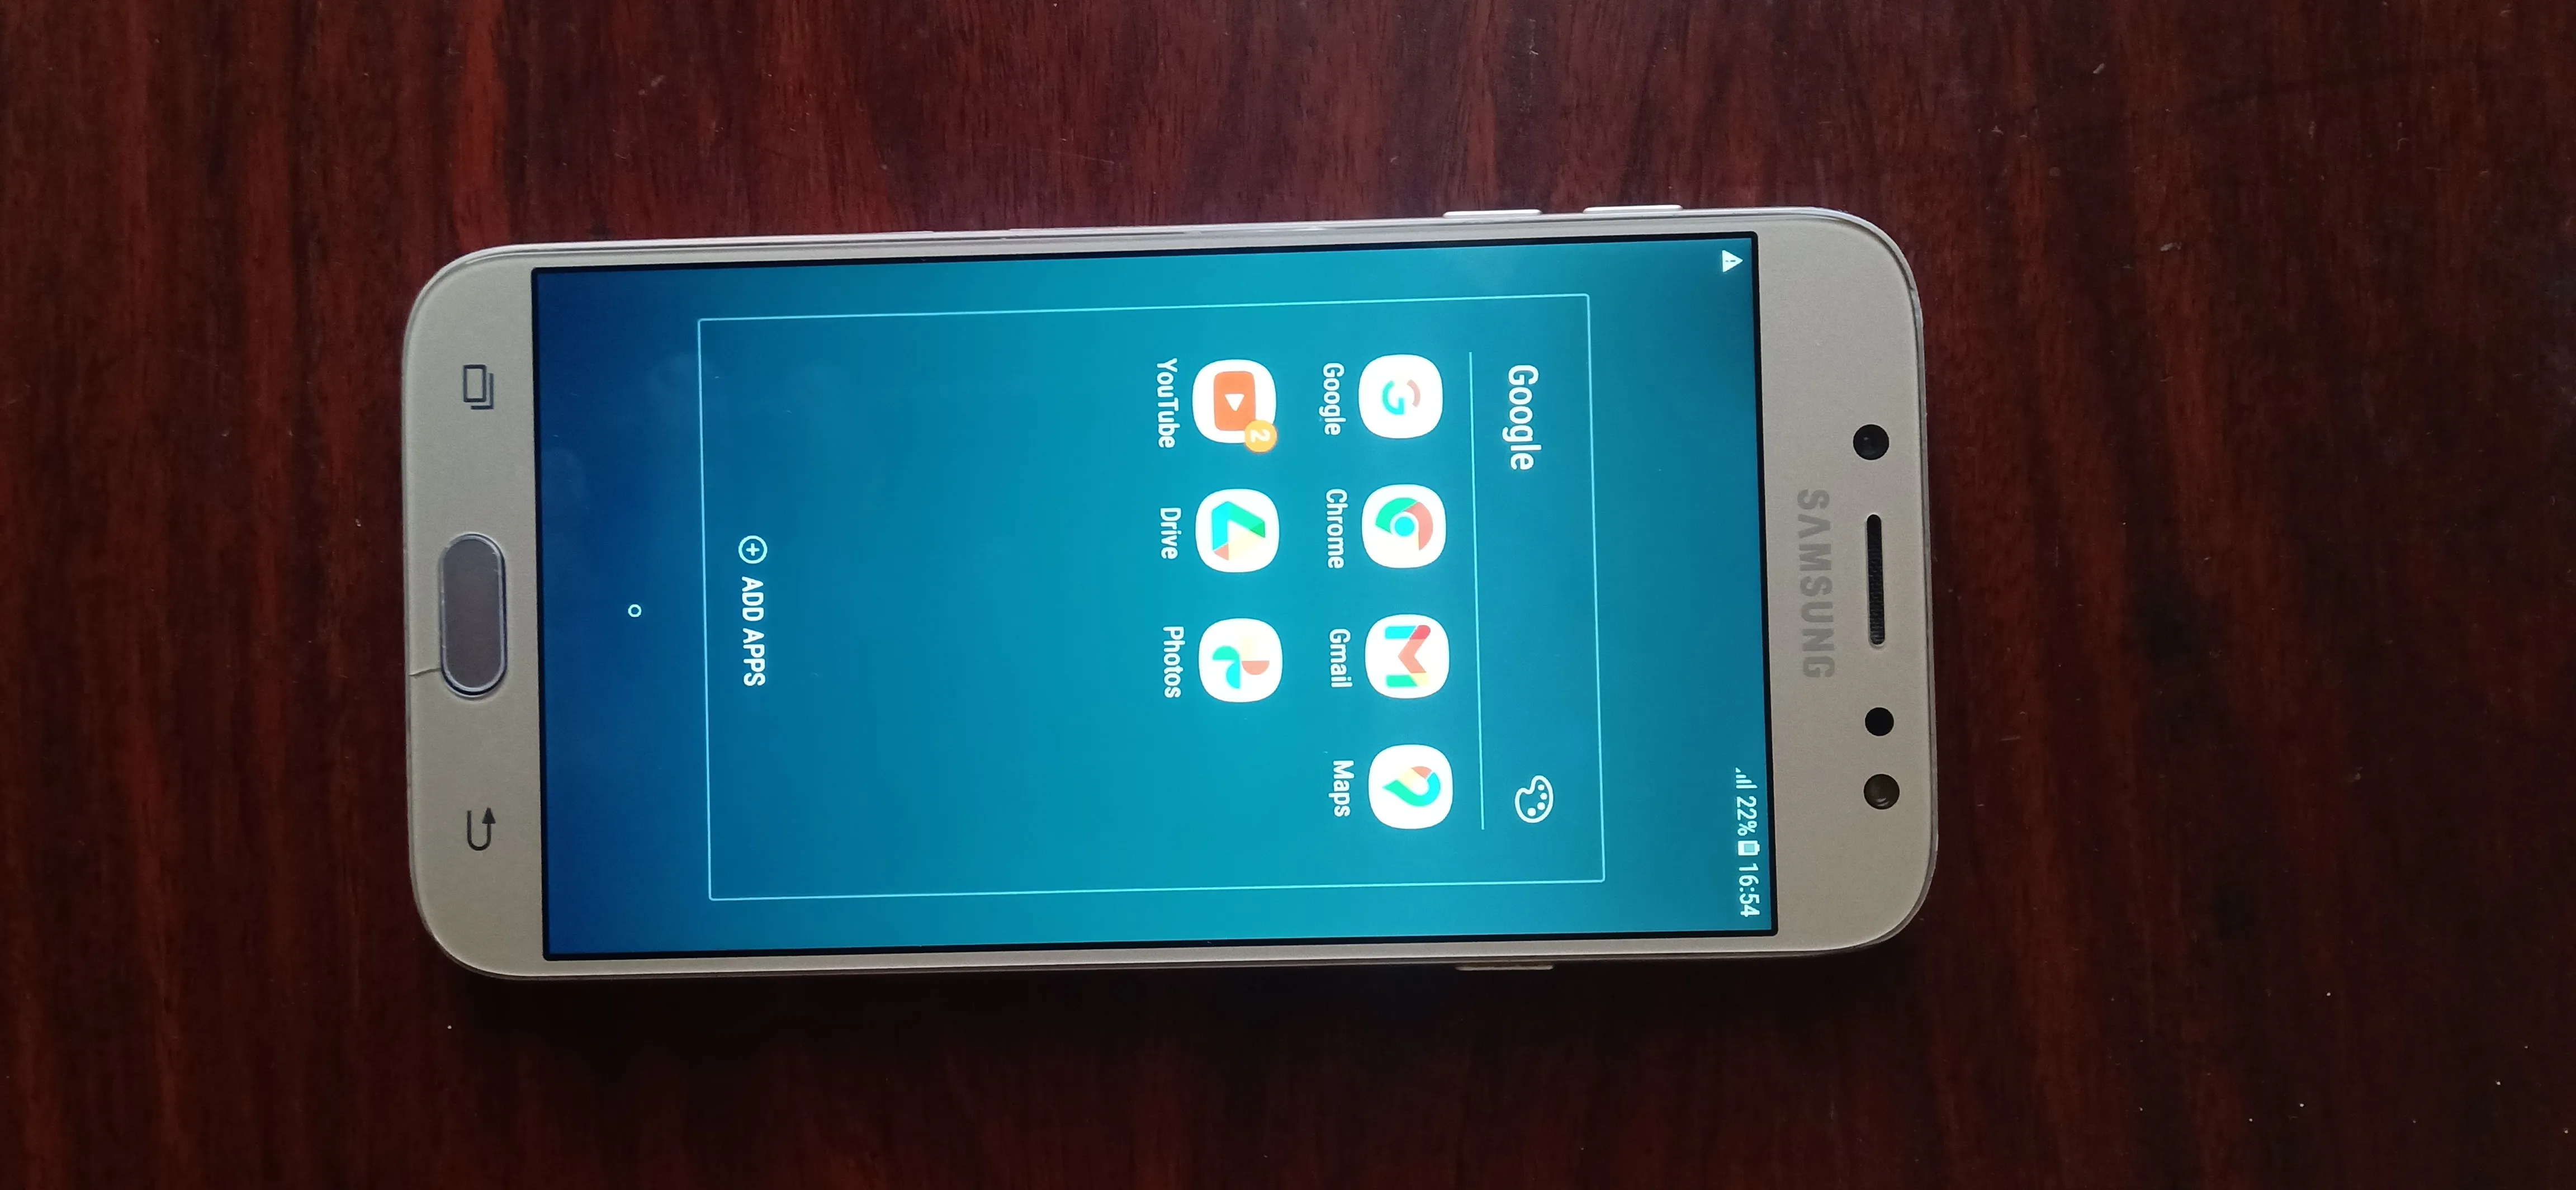 Samsung Galaxy J7 Pro - photo 1